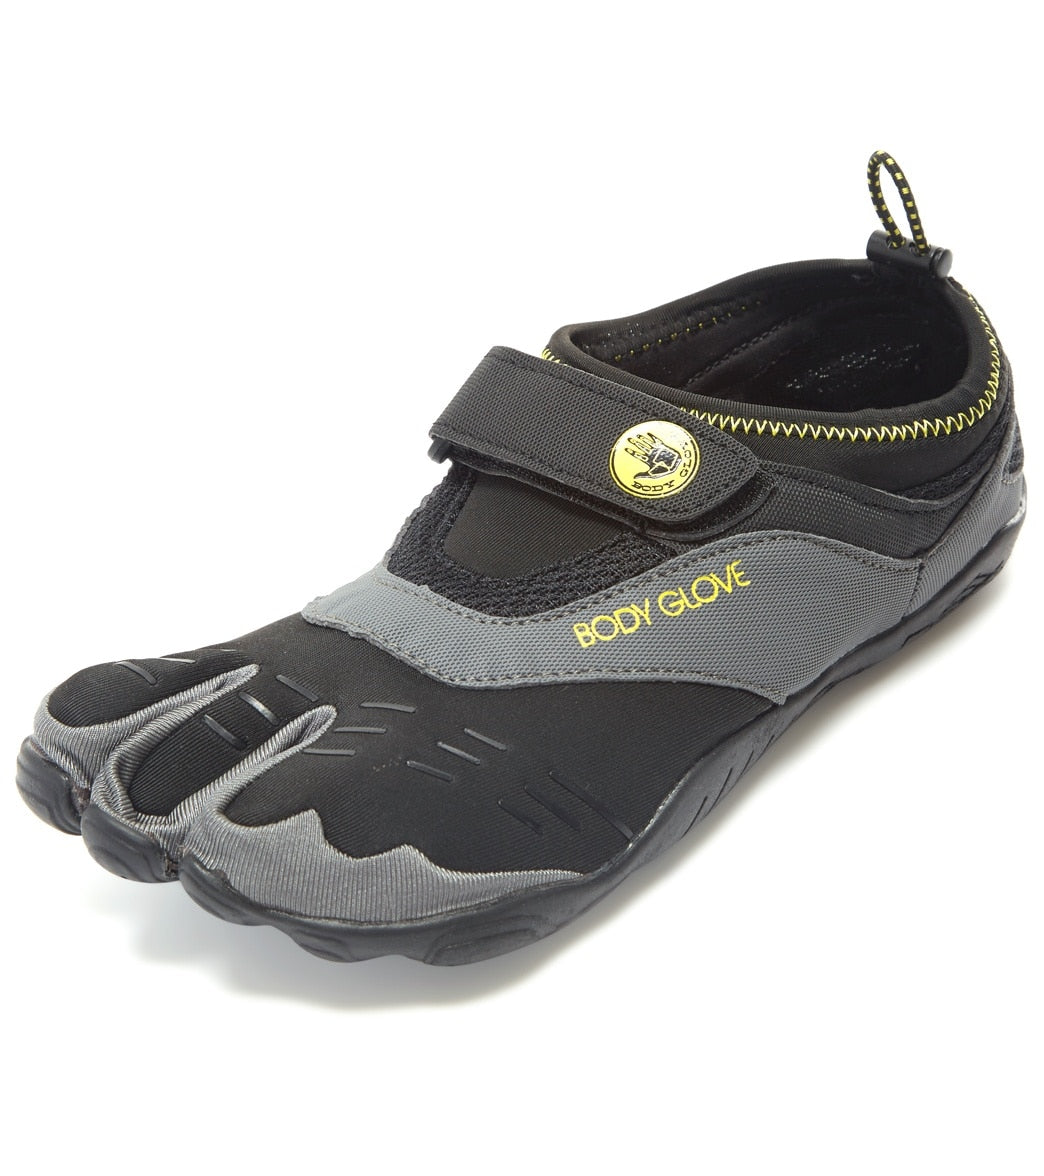 Body Glove Men's 3T Max Water Shoe at SwimOutlet.com